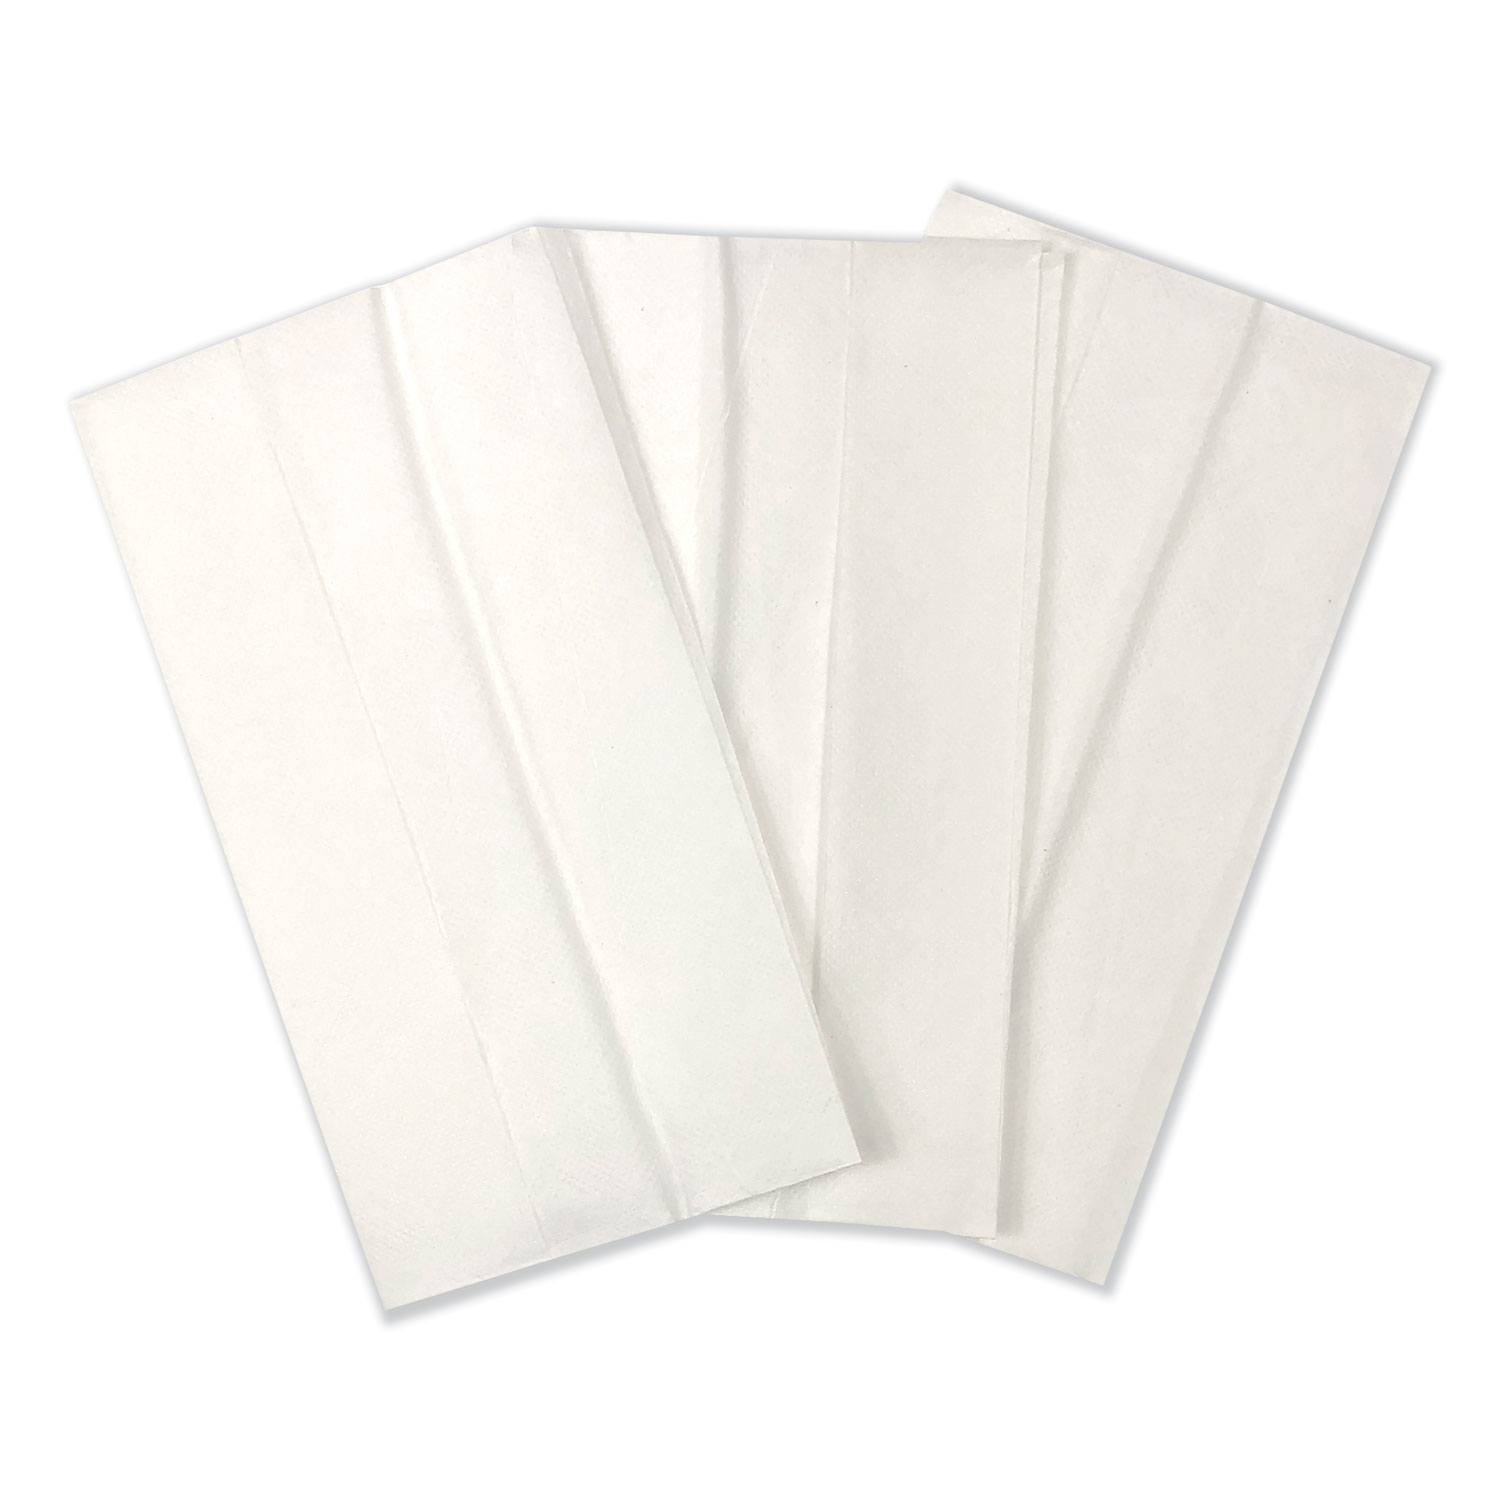  GEN GENTFOLDNAPK Tall-Fold Napkins, 1-Ply, 7 x 13 1/4, White, 10,000/Carton (GENTFOLDNAPKW) 